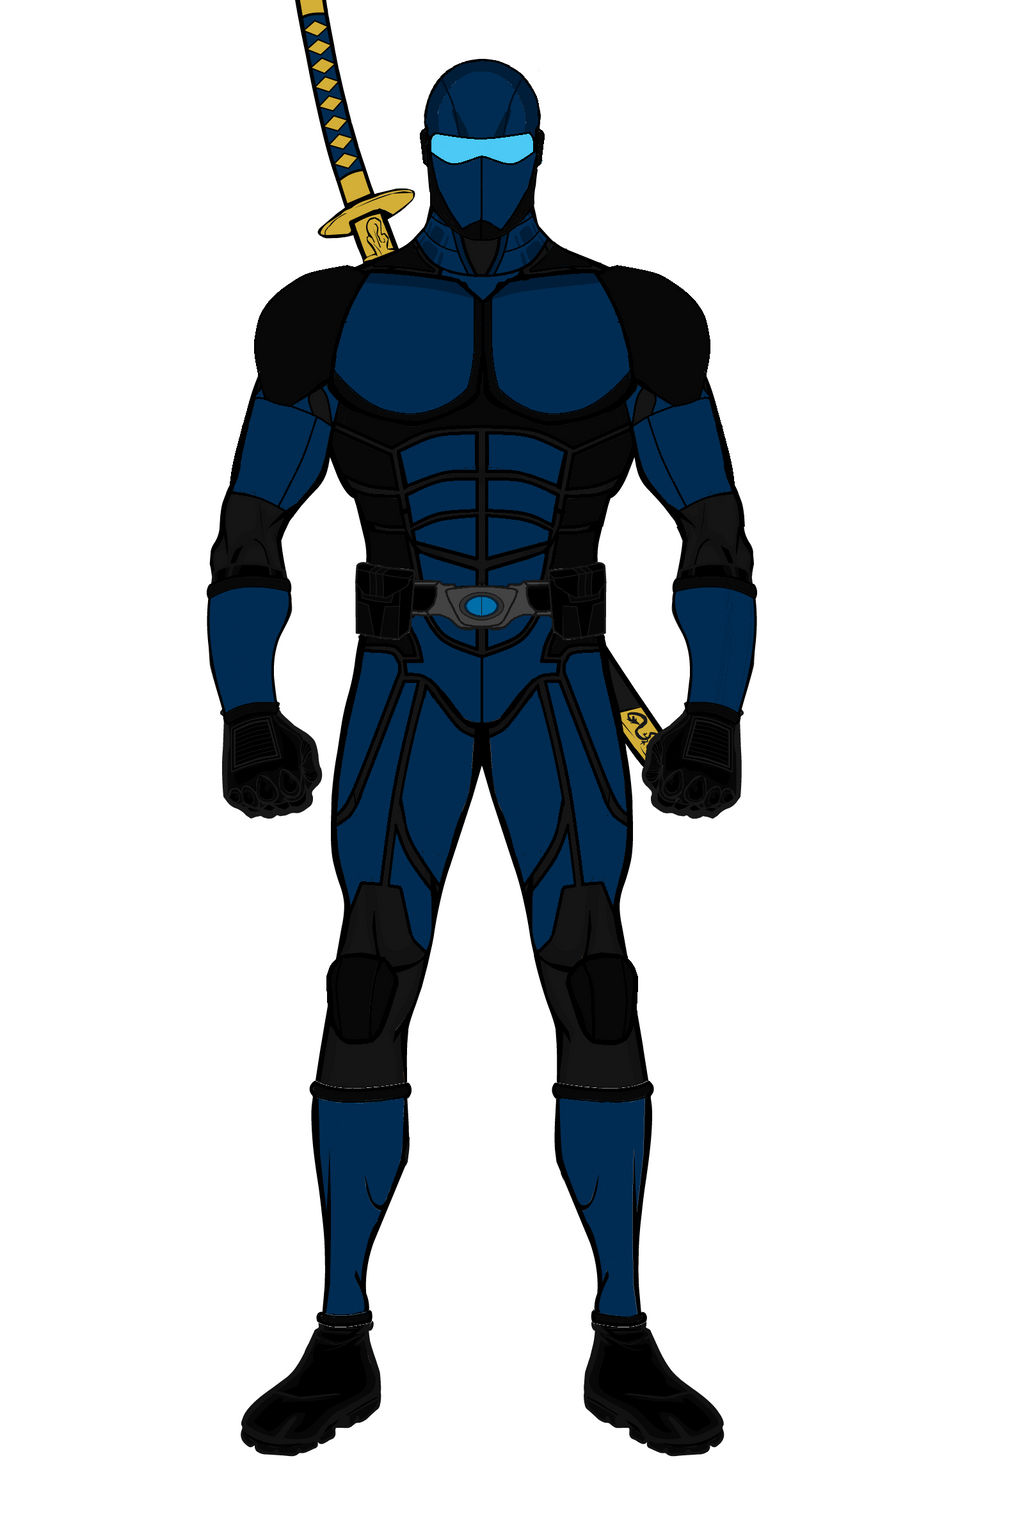 Kataman (Comic)- Kevlar Tactical Suit 3.8 by aniartluke82 on